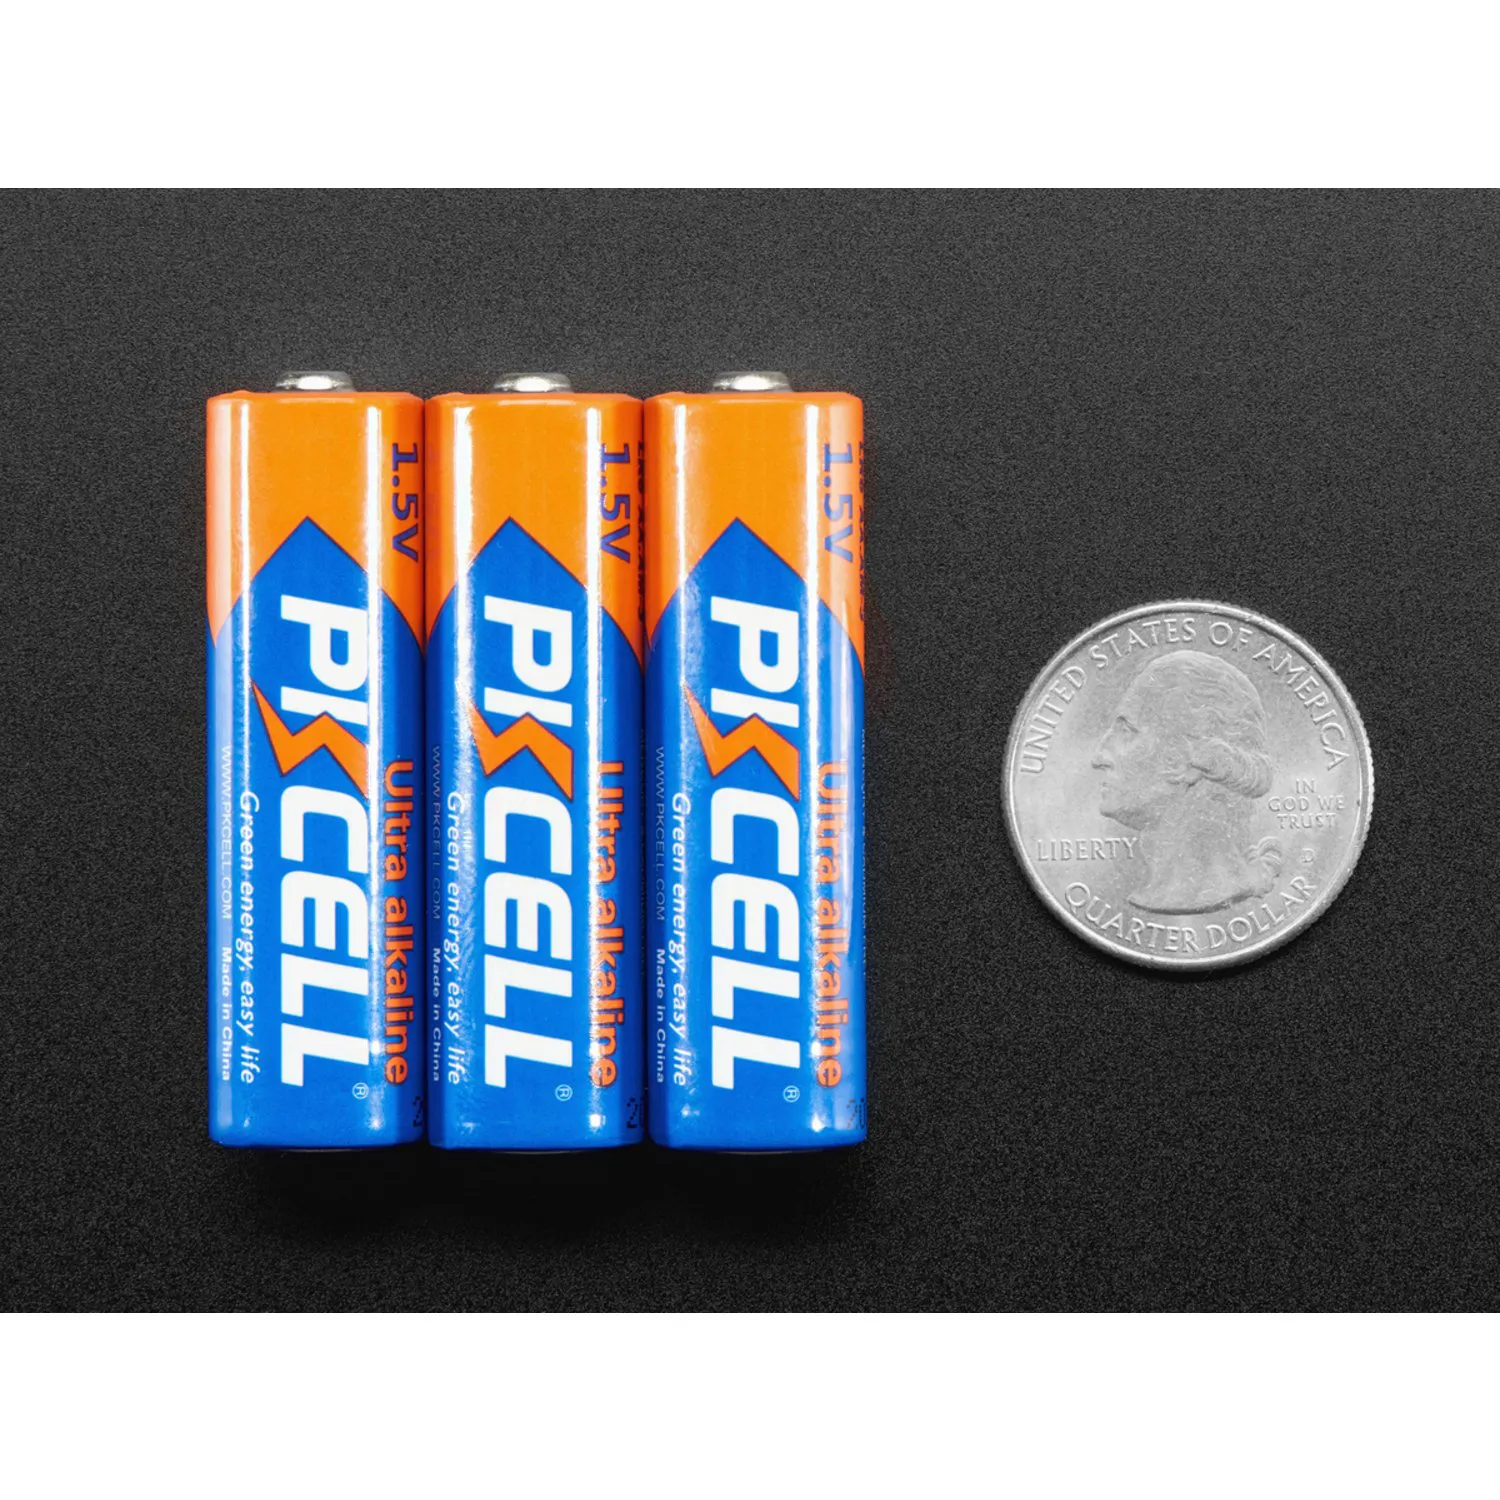 Photo of Alkaline AA batteries (LR6) - 3 pack